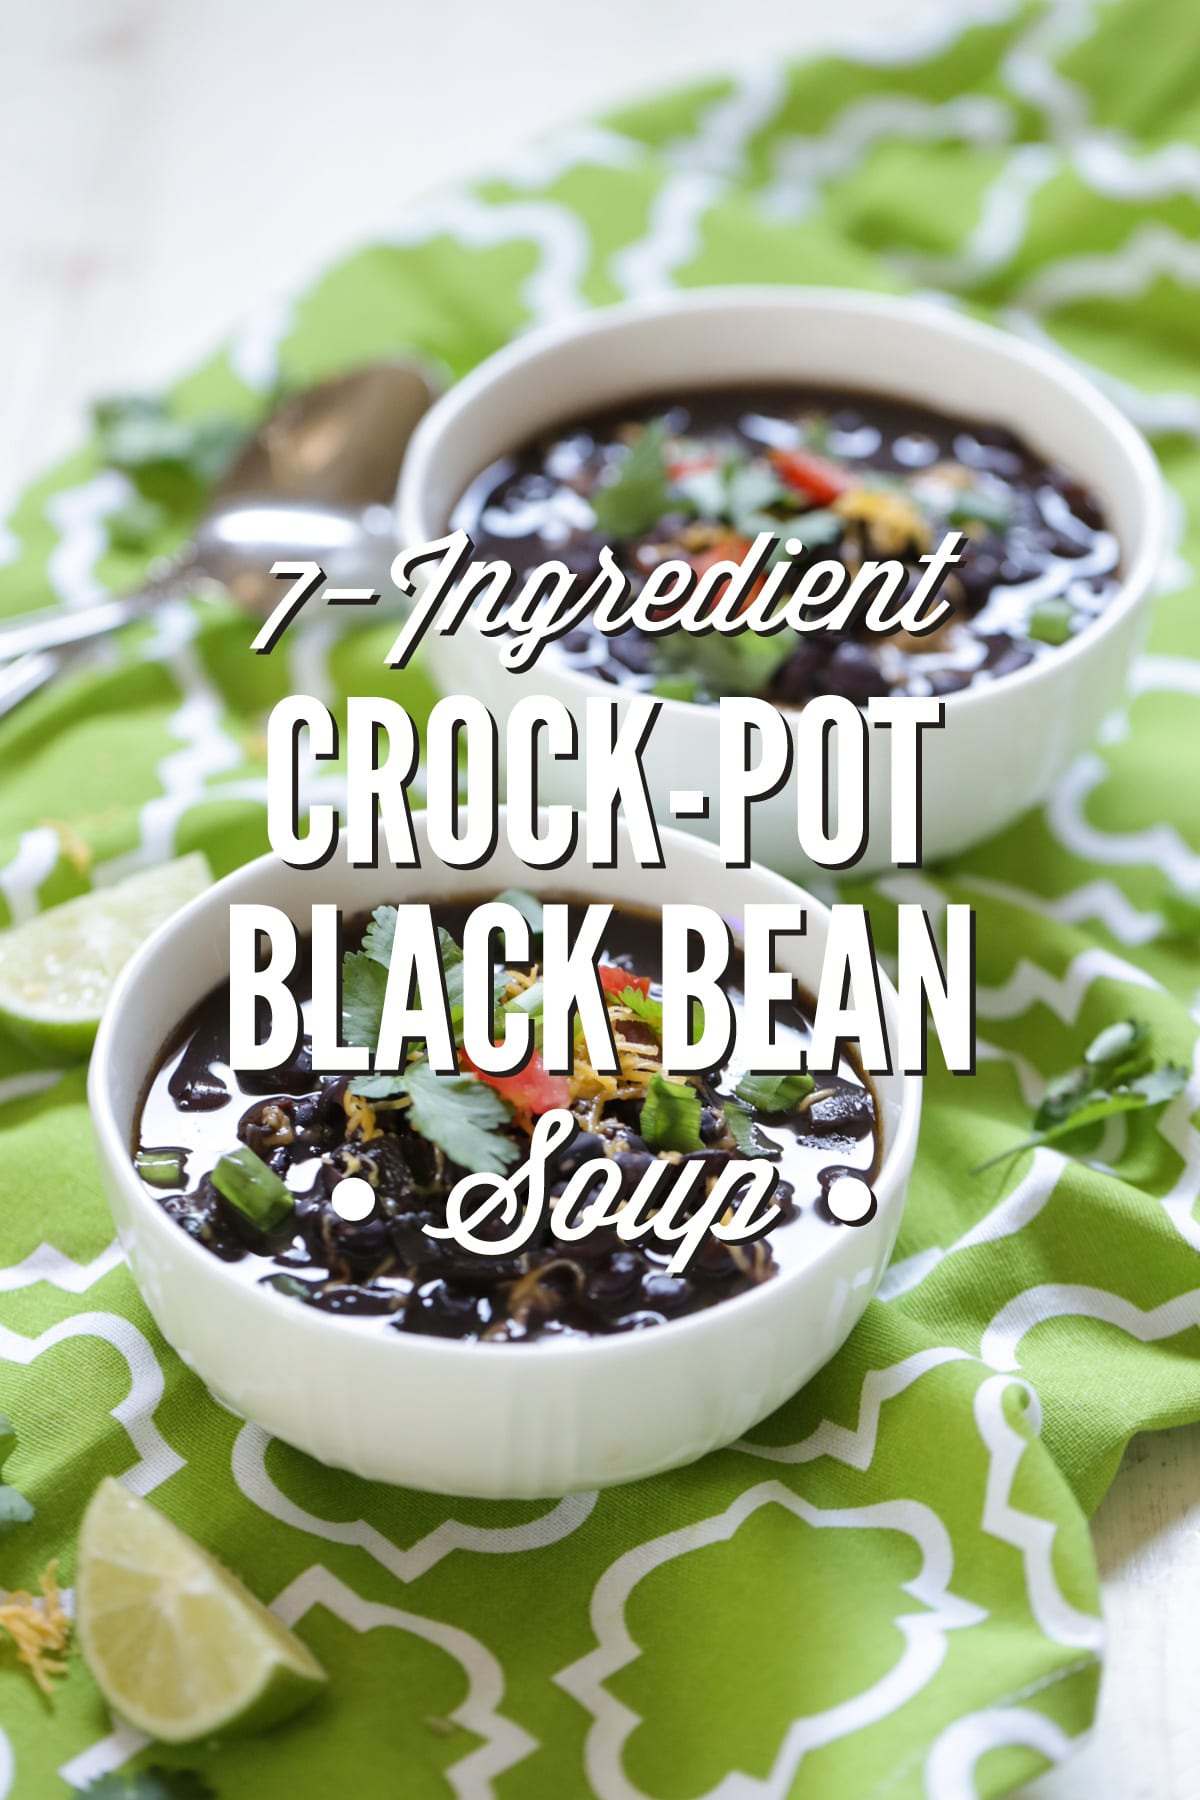 7-Ingredient Crock-Pot Black Bean Soup